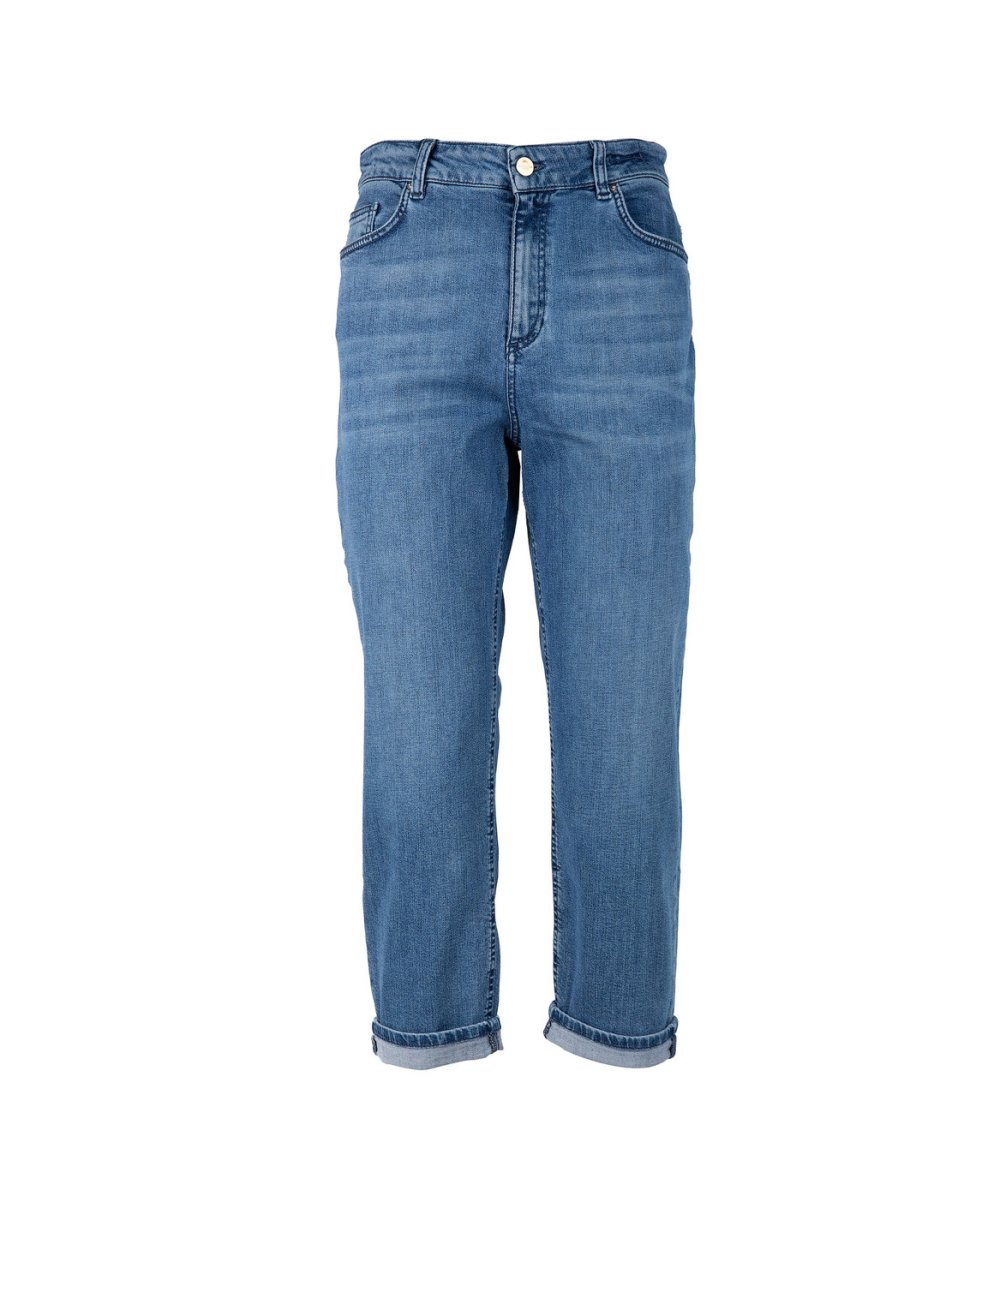 SS22 Jeans dalla linea "Tomboy"